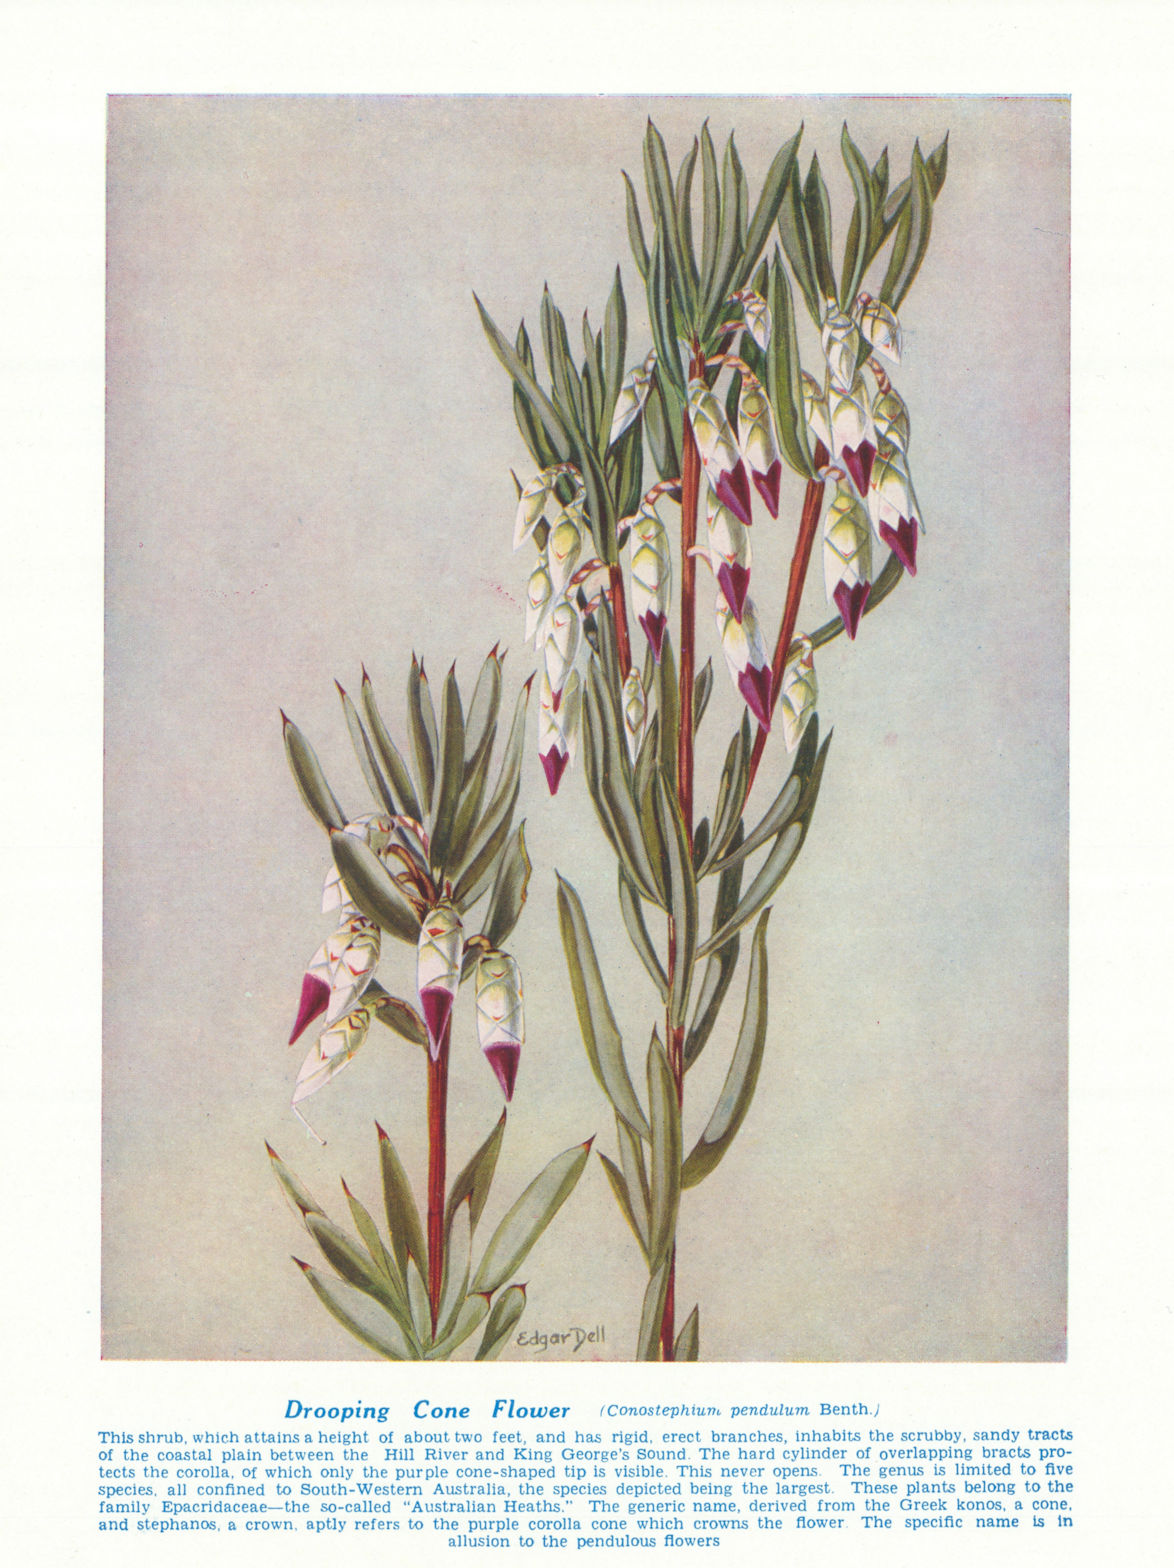 Drooping Cone-flower (Conostephium pendulum). West Australian Wild Flowers 1950